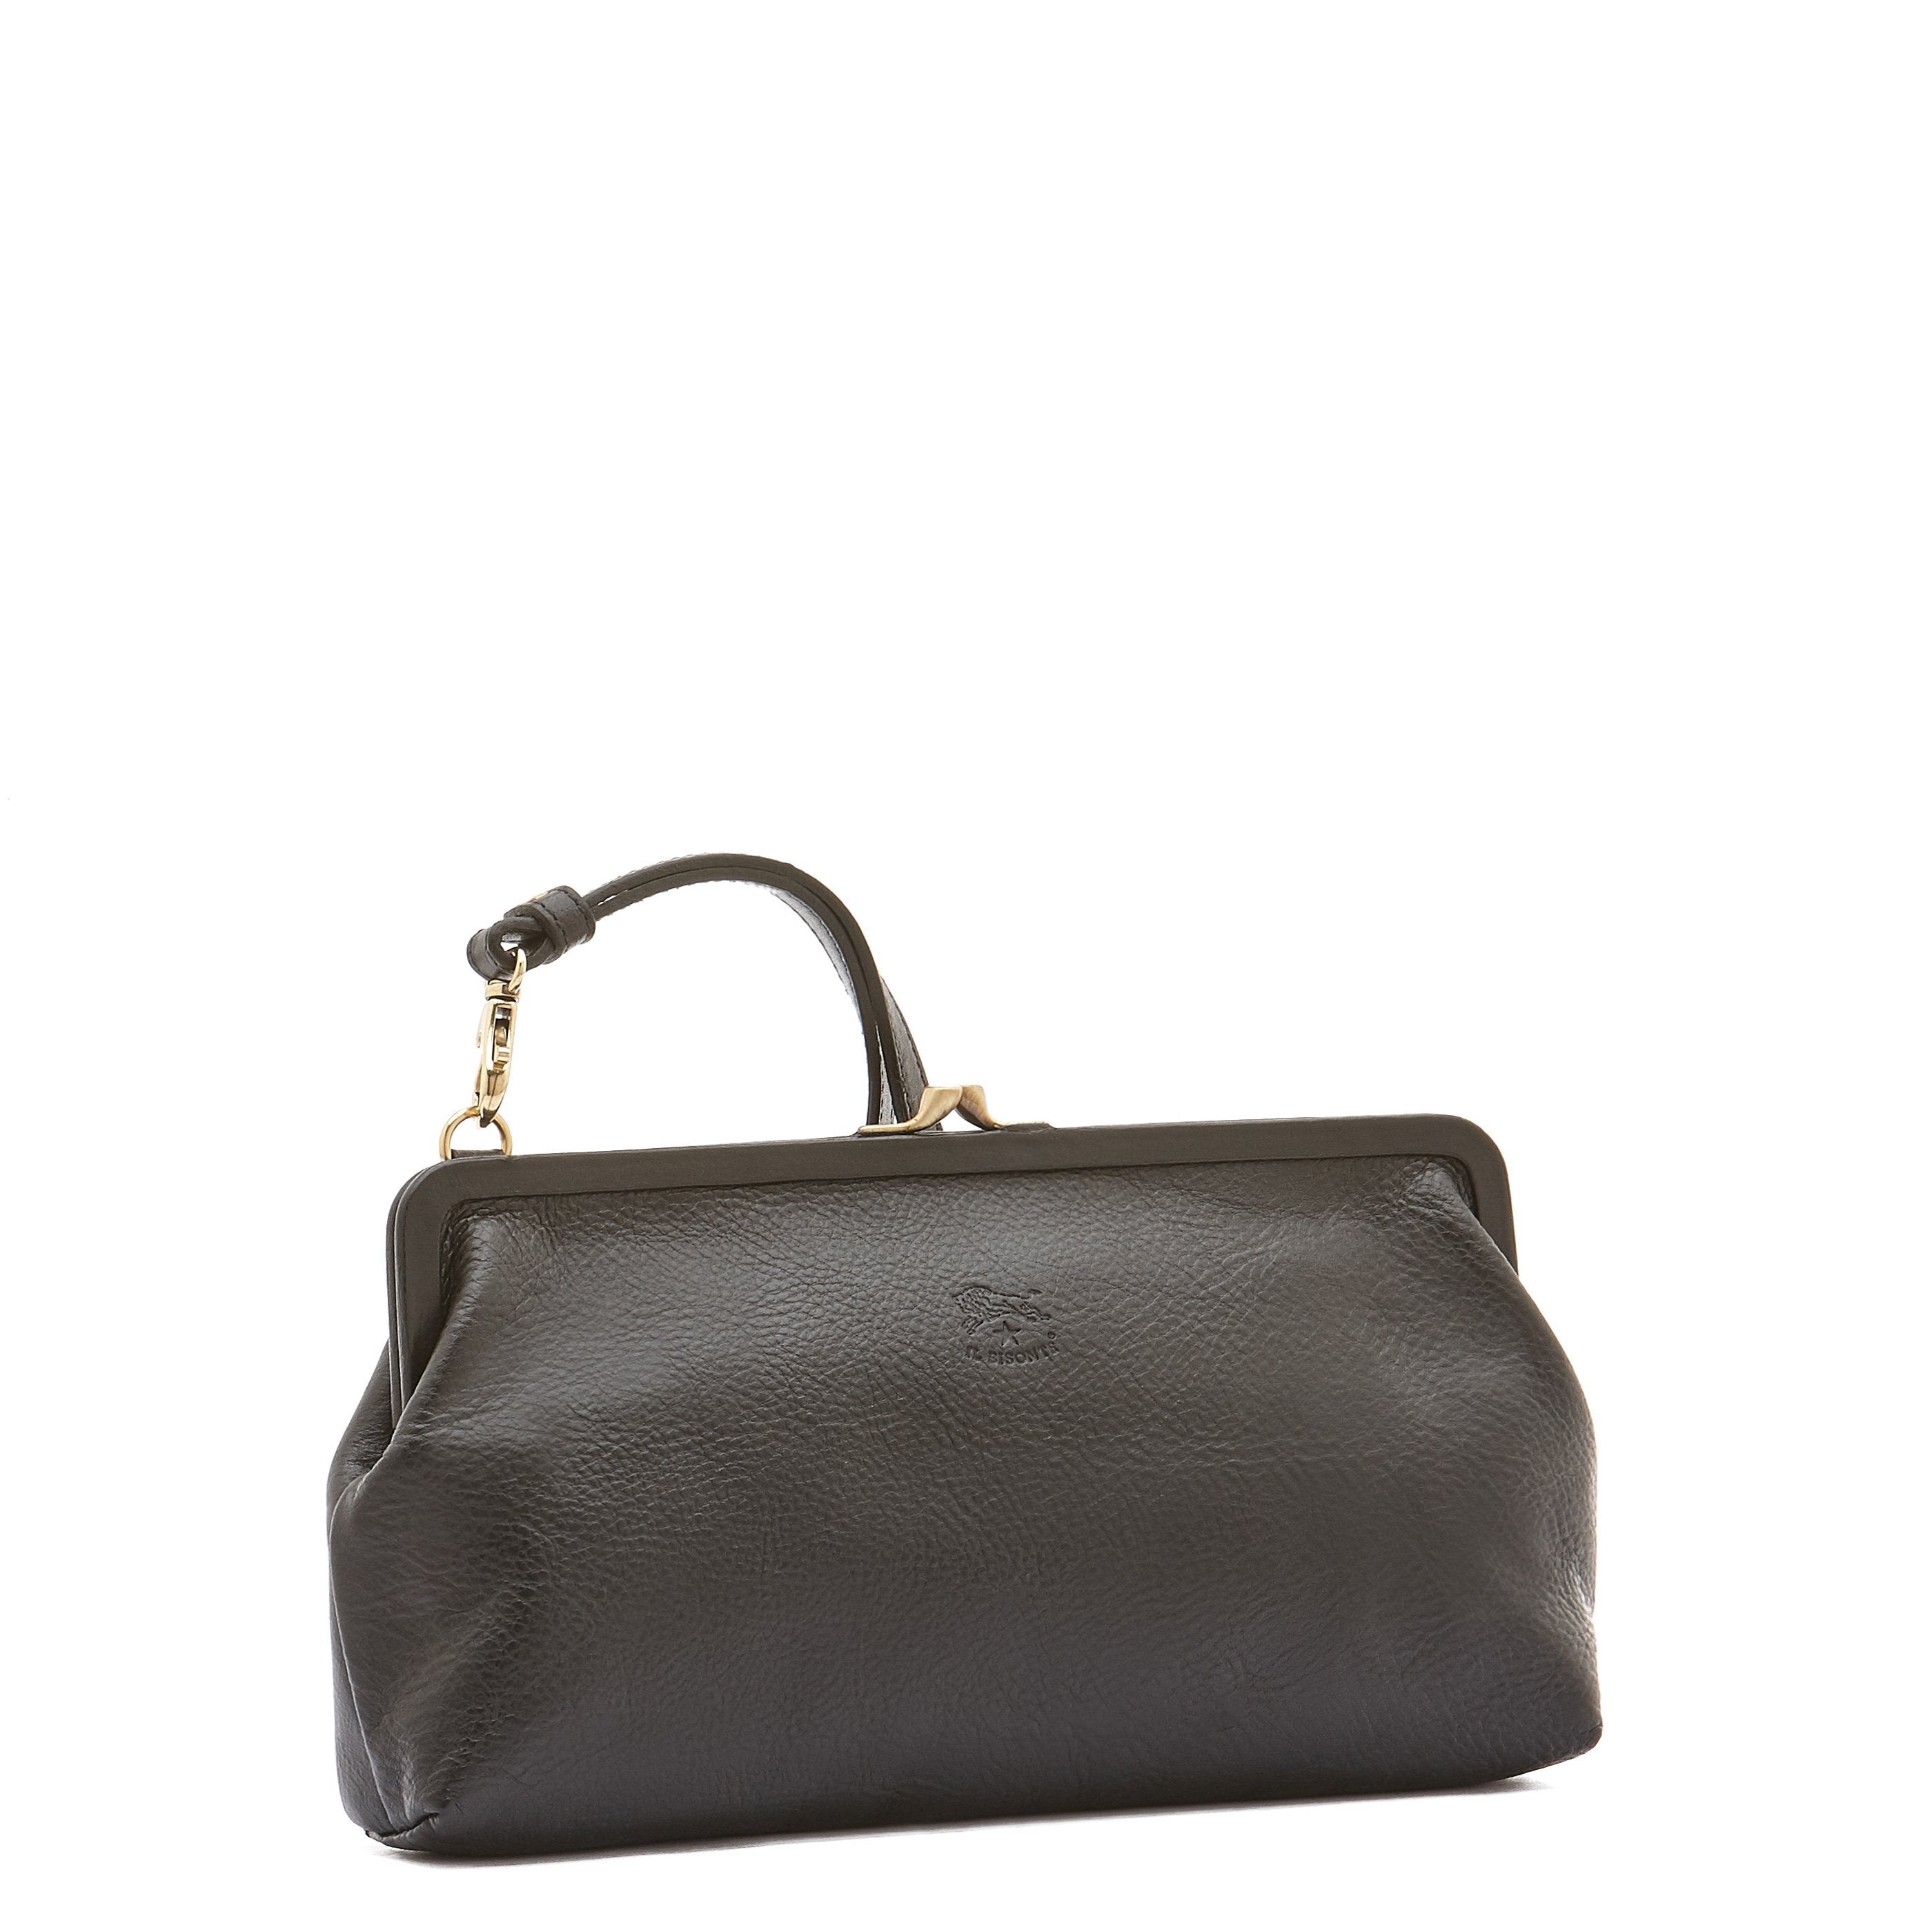 Mm Desire Handbags Clutches - Buy Mm Desire Handbags Clutches